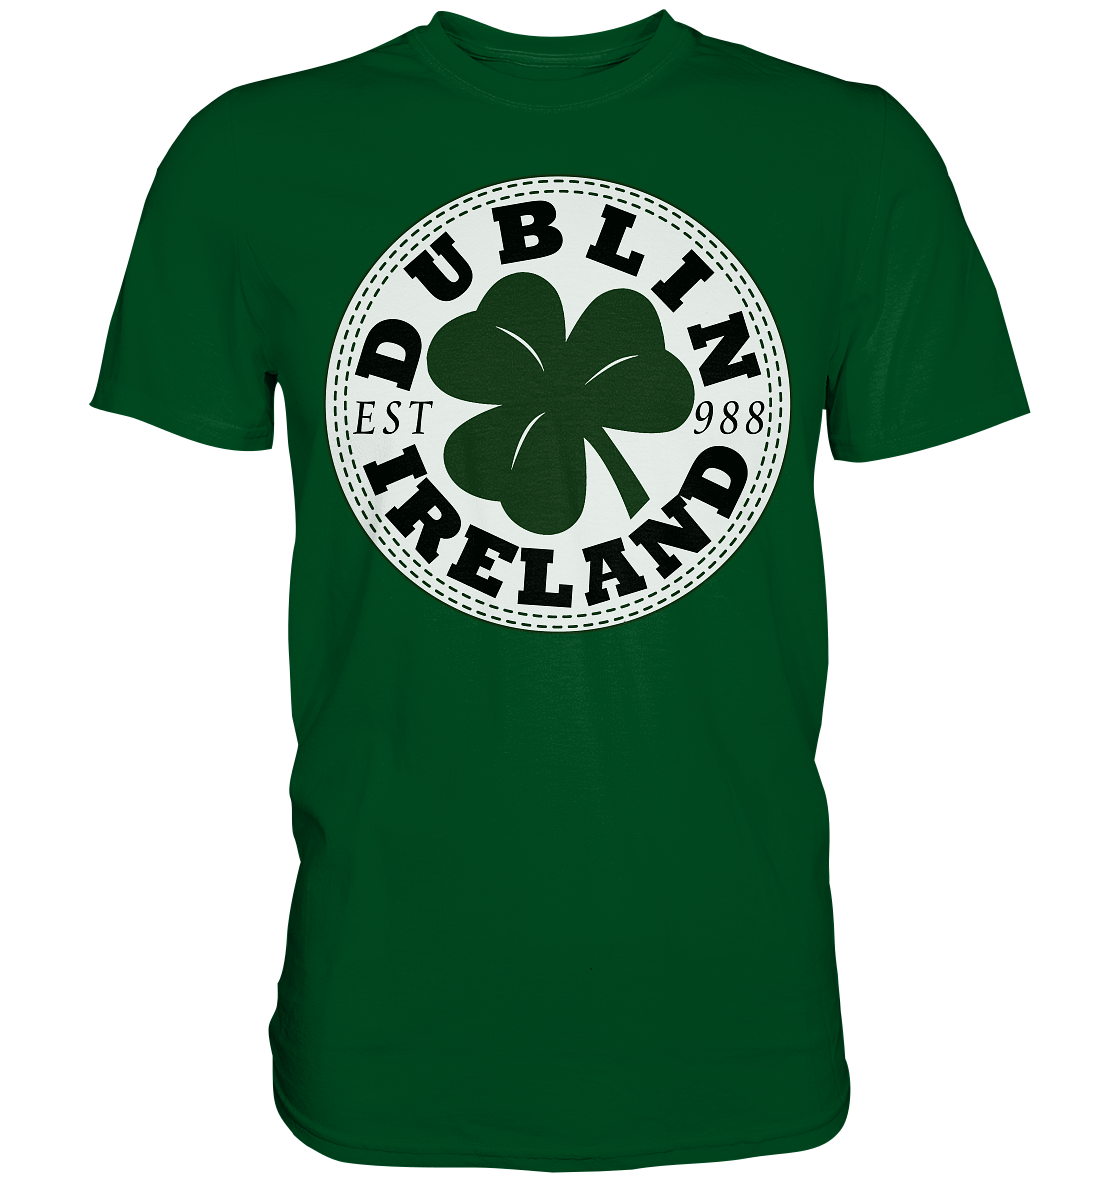 Dublin "Ireland / Est 988" - Premium Shirt